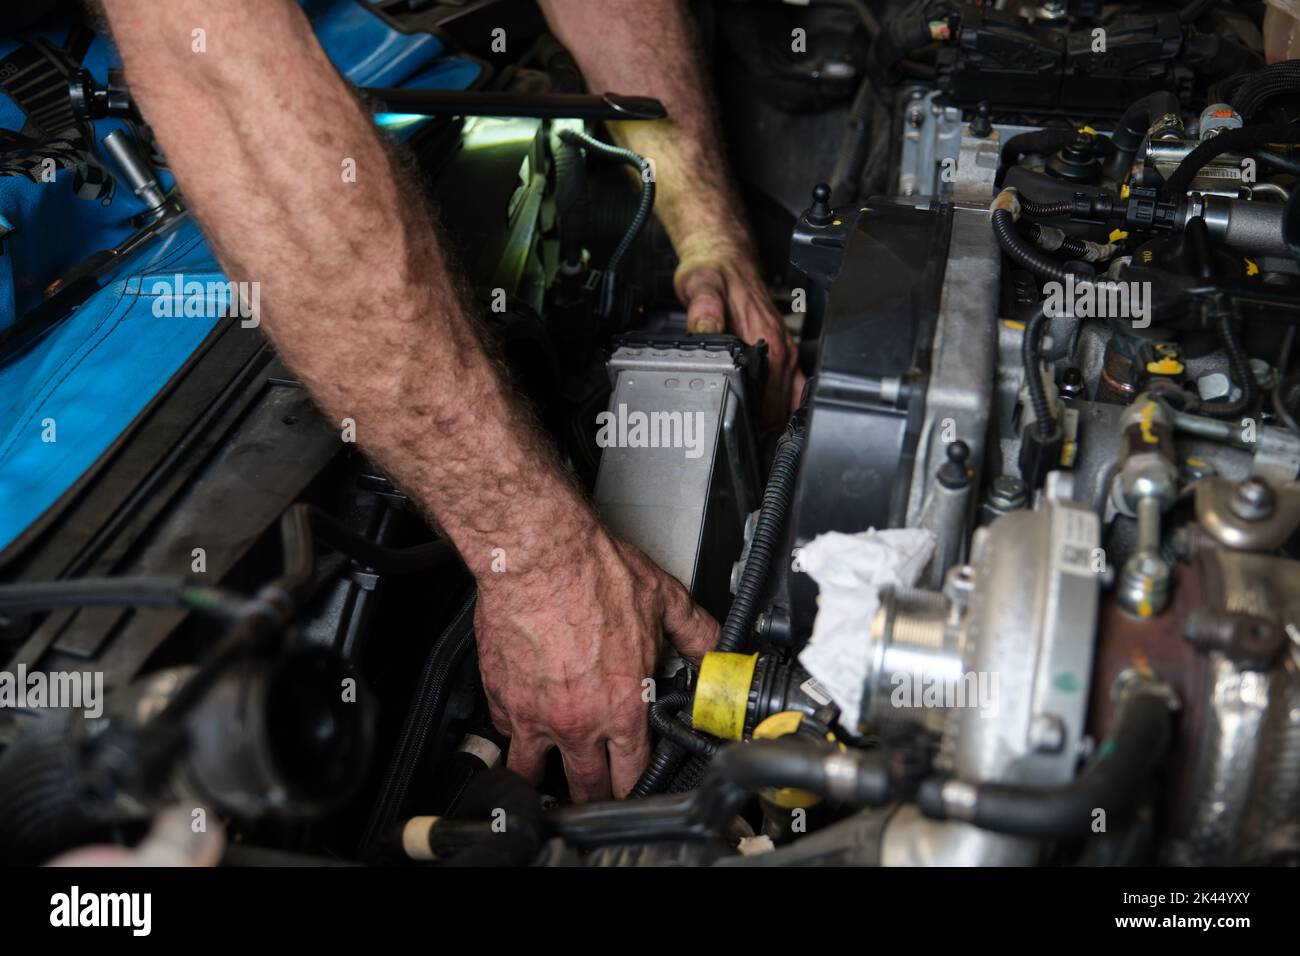 Car mechanic hands replacing intercooler on a car engine. Stock Photo